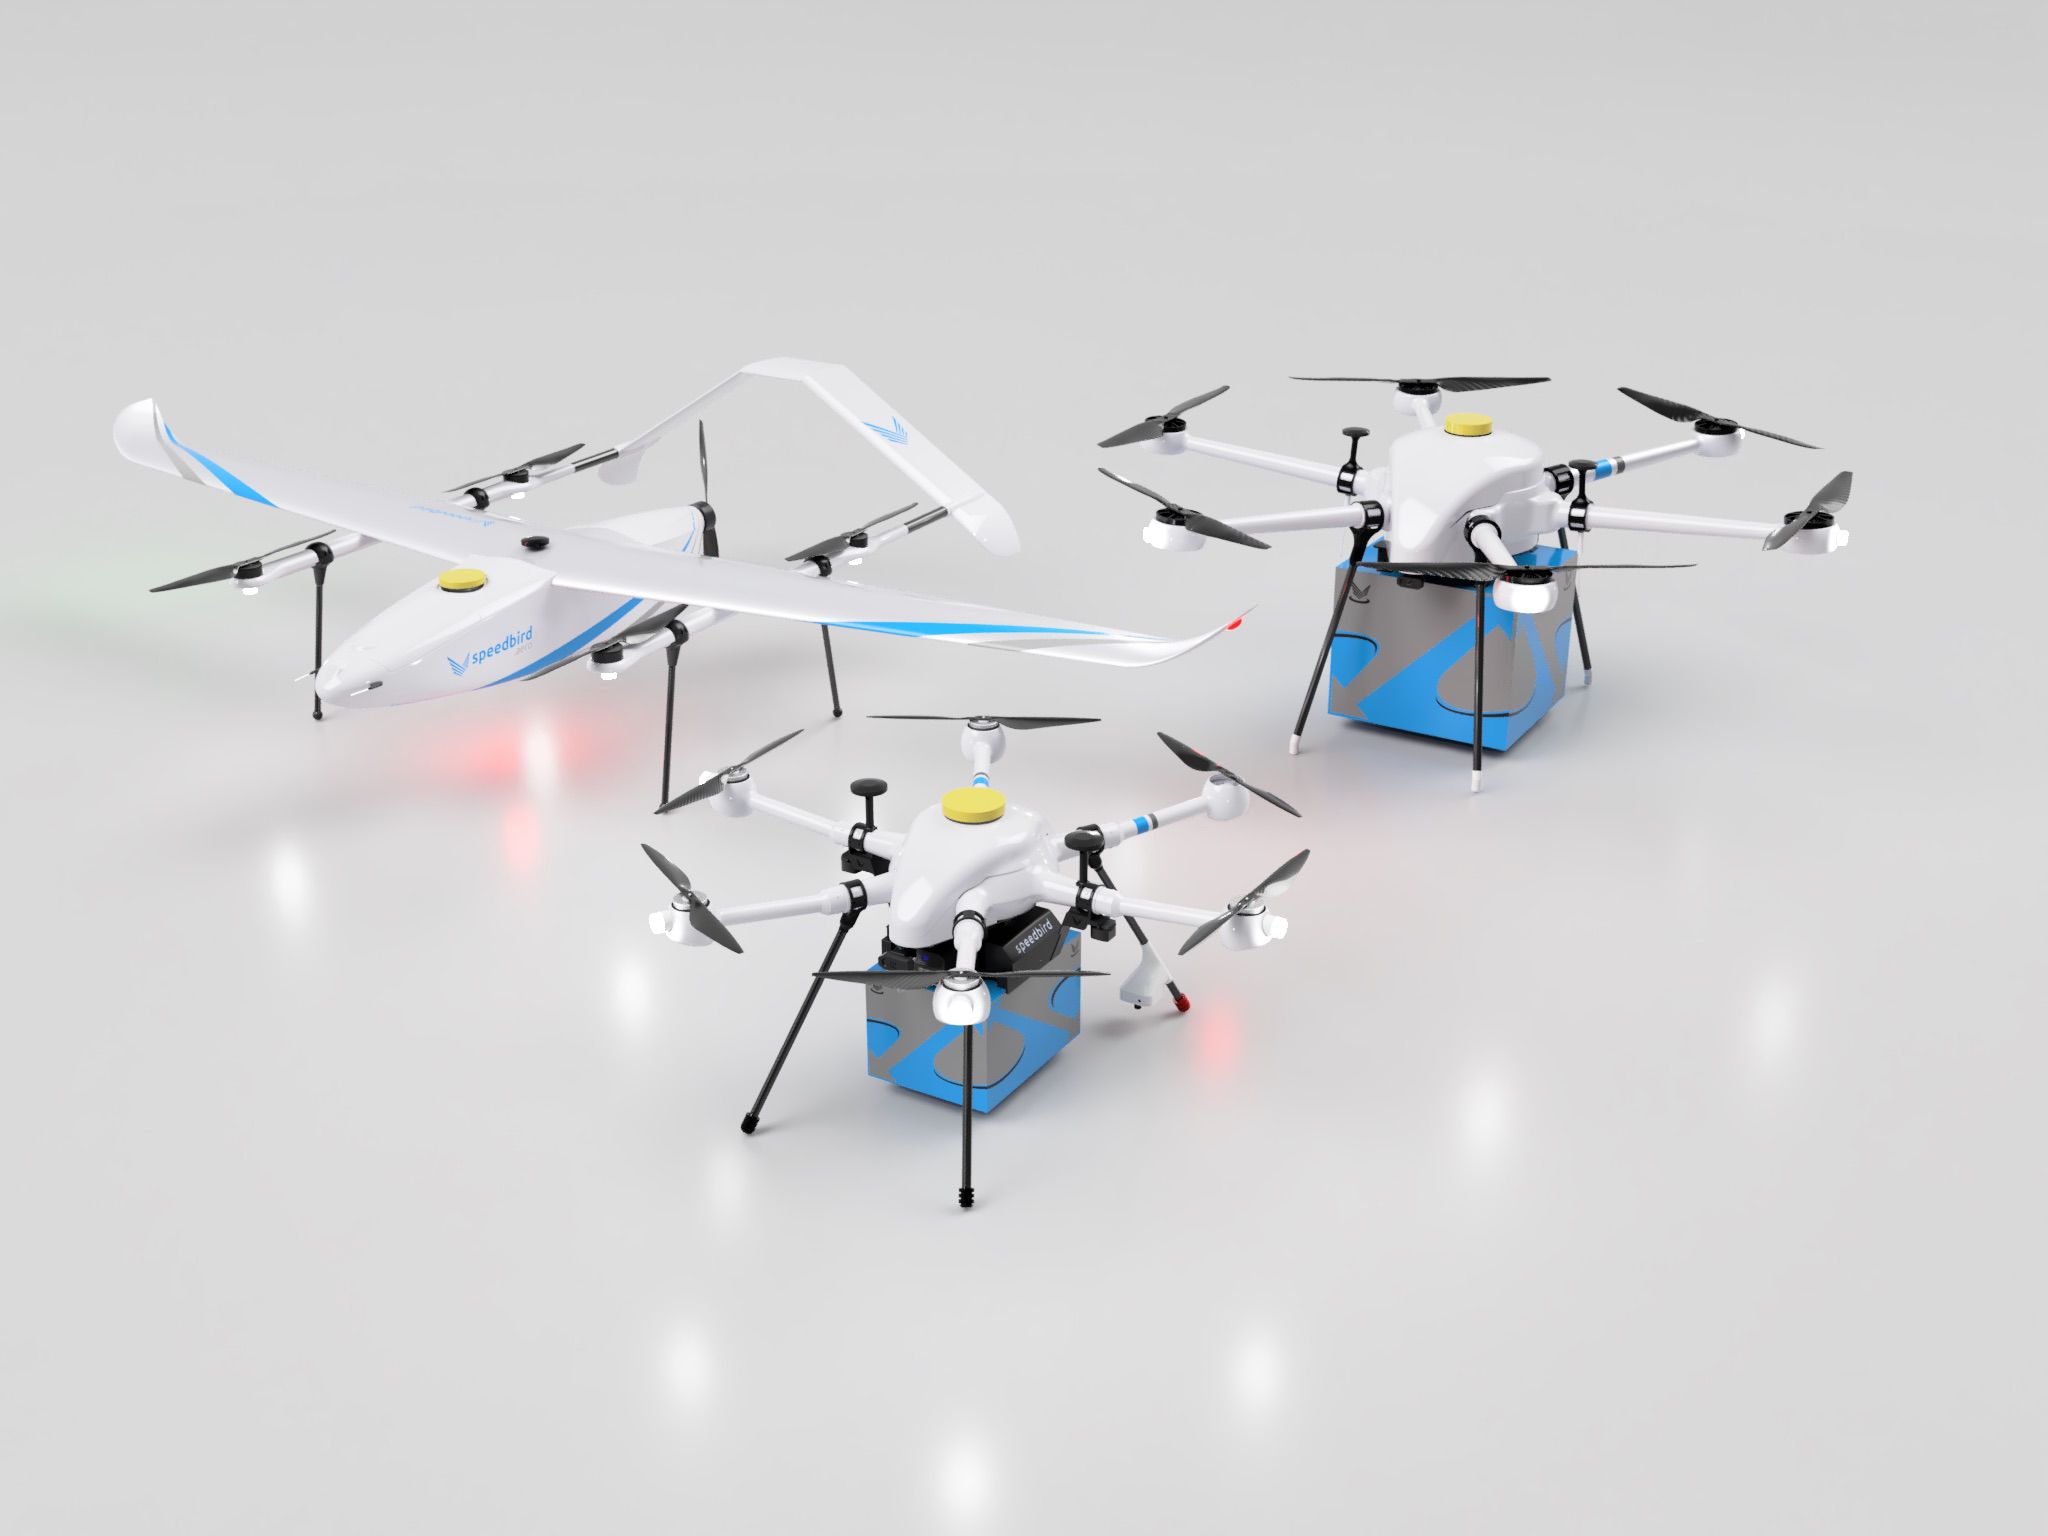 Speedbird Aero Signs Multi Phase Integration Project With Parazero For New Fleet Of Autonomous Delivery Drones Techtoday Newspaper